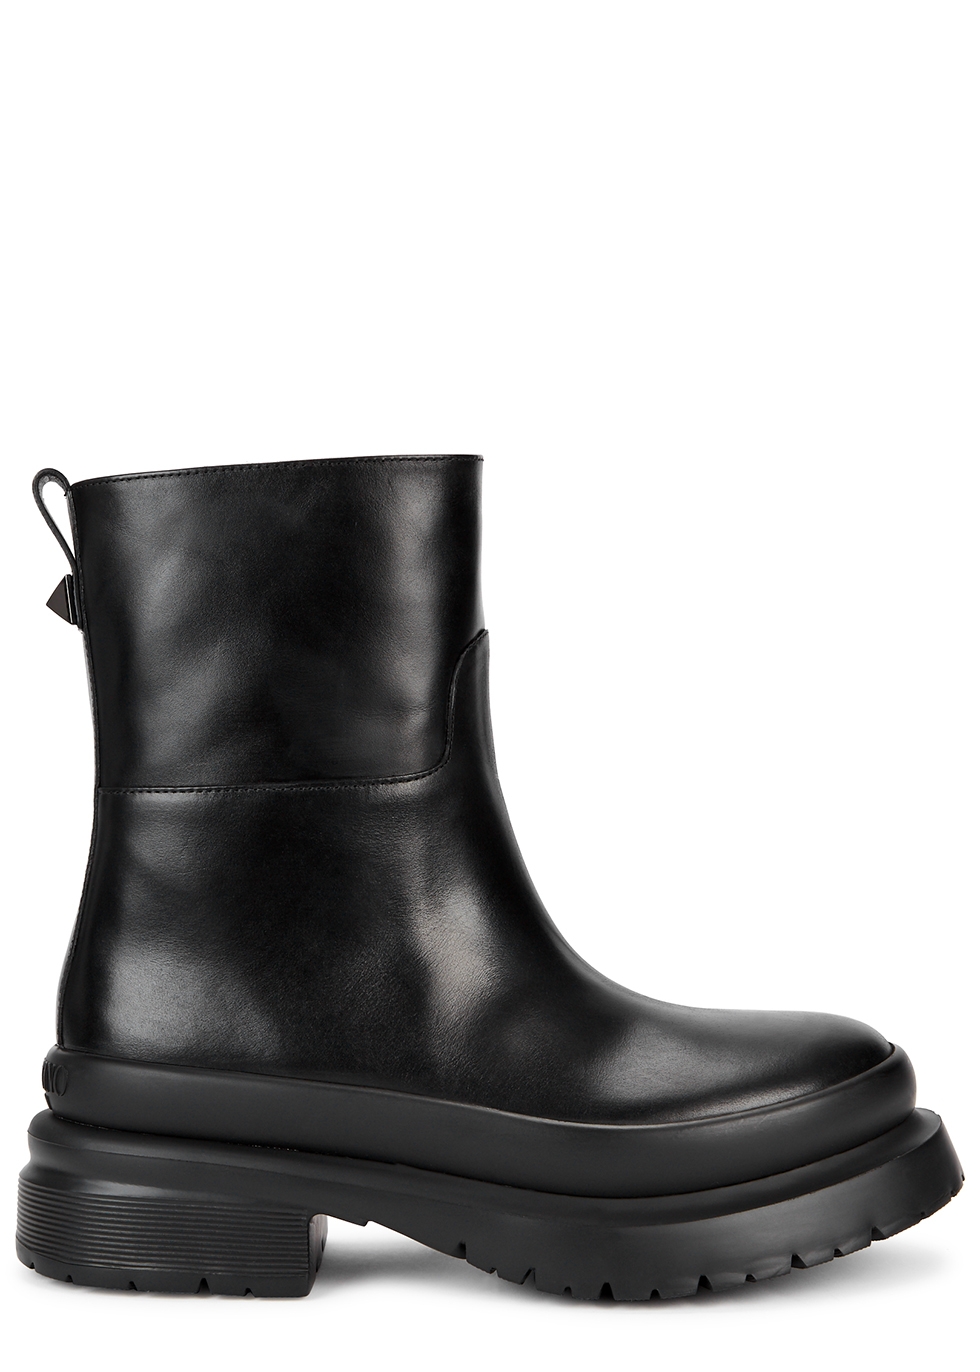 Valentino Garavani black leather combat boots